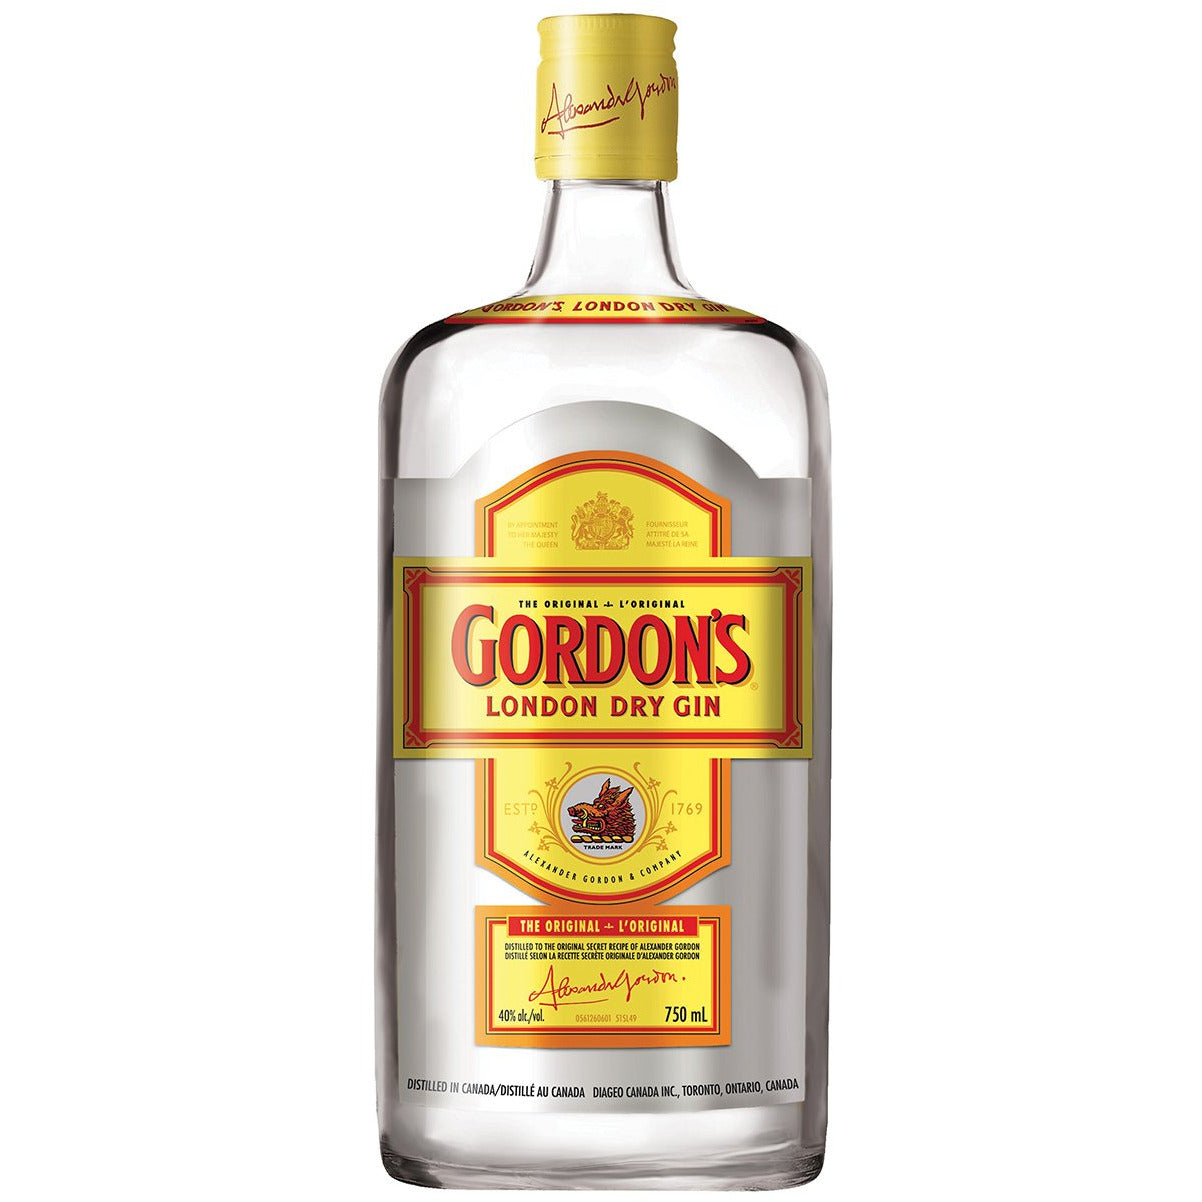 GORDON'S LONDON DRY GIN (750 ML) - $14.99 - $125 Free Shipping